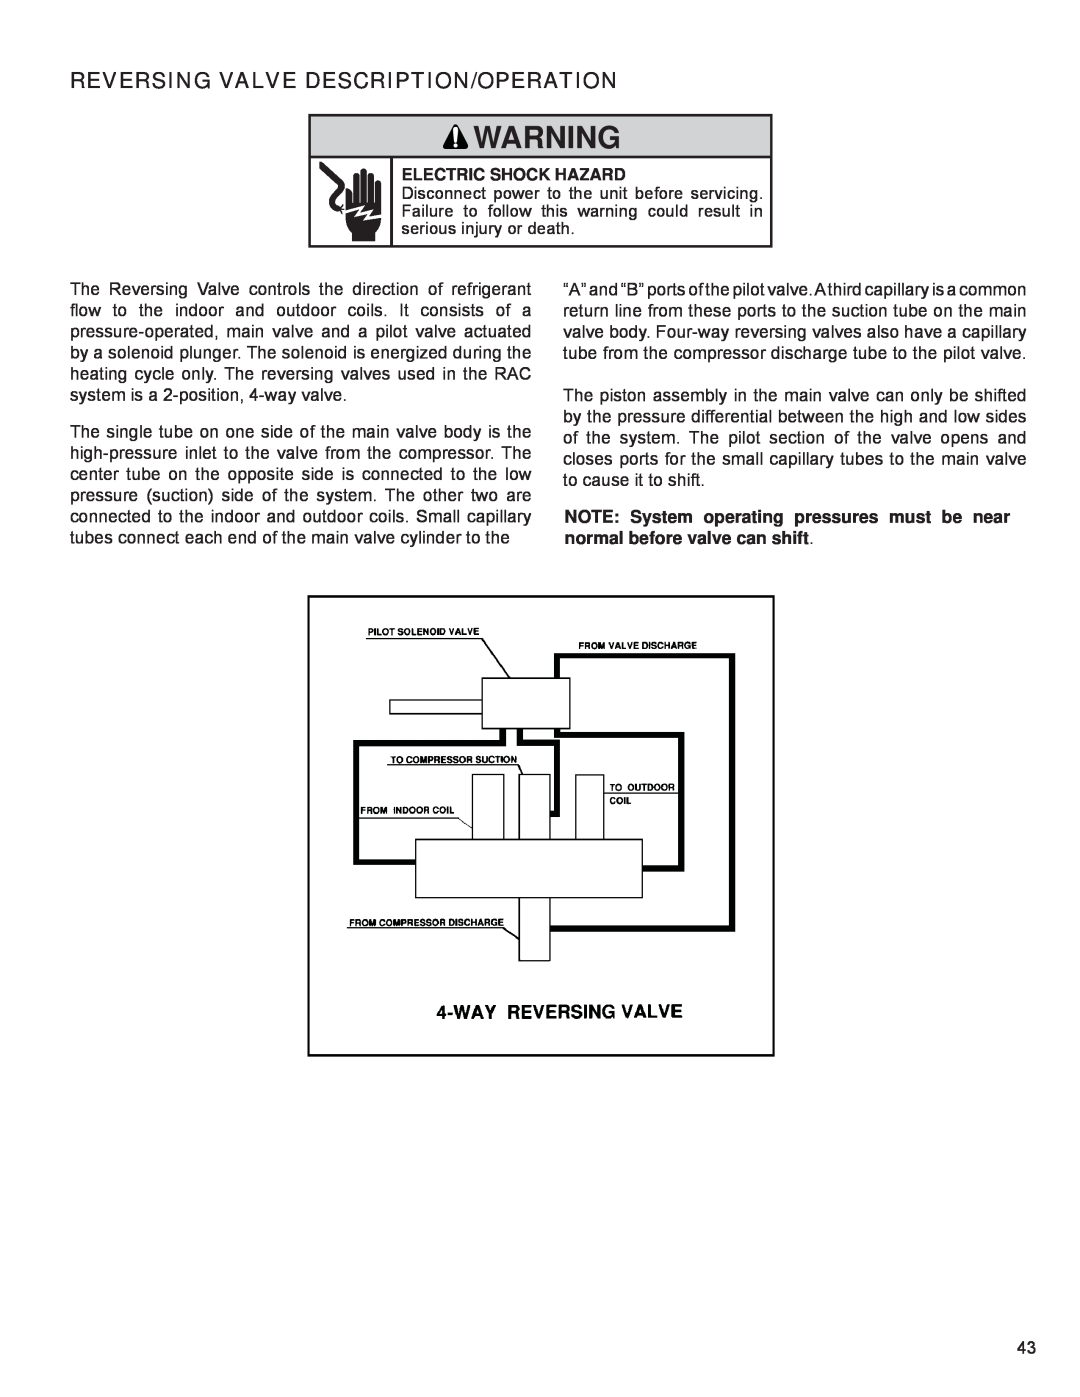 Friedrich R-410A service manual Reversing Valve Description/Operation, Electric Shock Hazard 